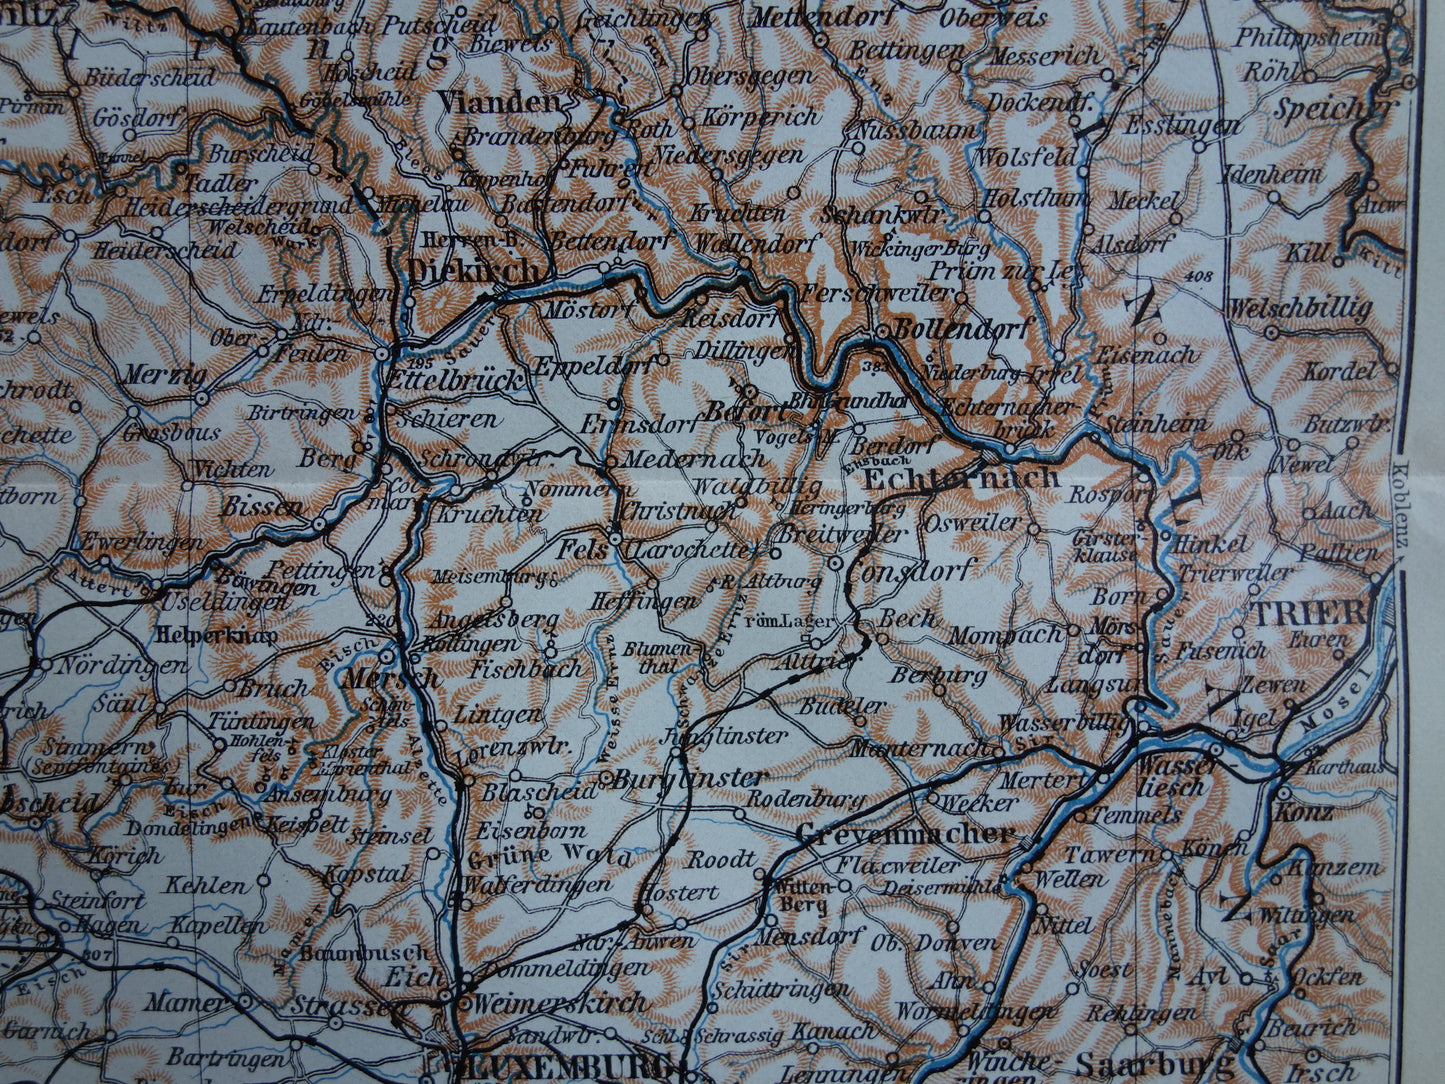 LUXEMBURG oude kaart van Luxemburg uit 1910 kleine originele antieke landkaart